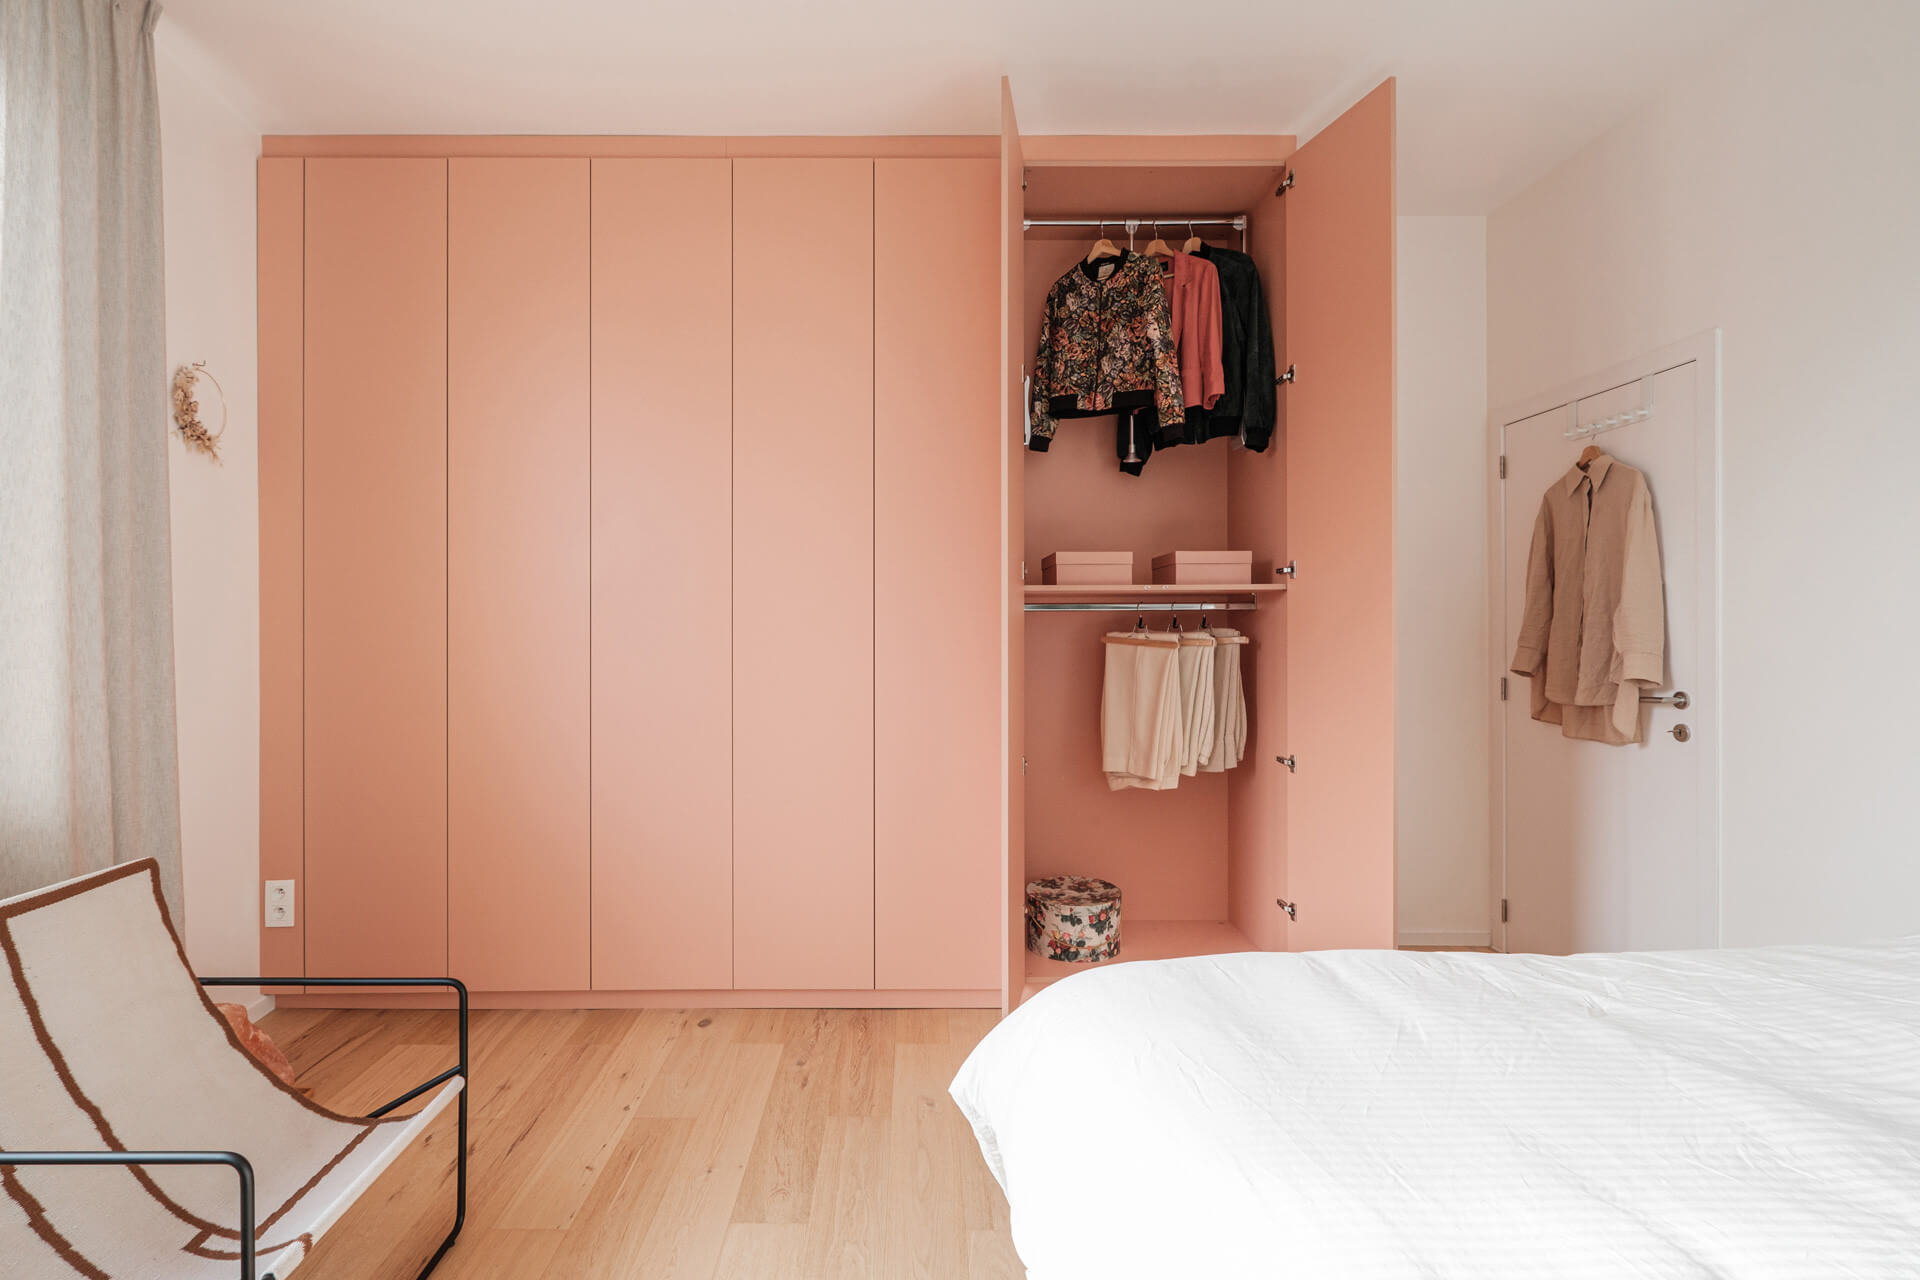 Custom bedroom wardrobe in the color 'Dusty Coral'